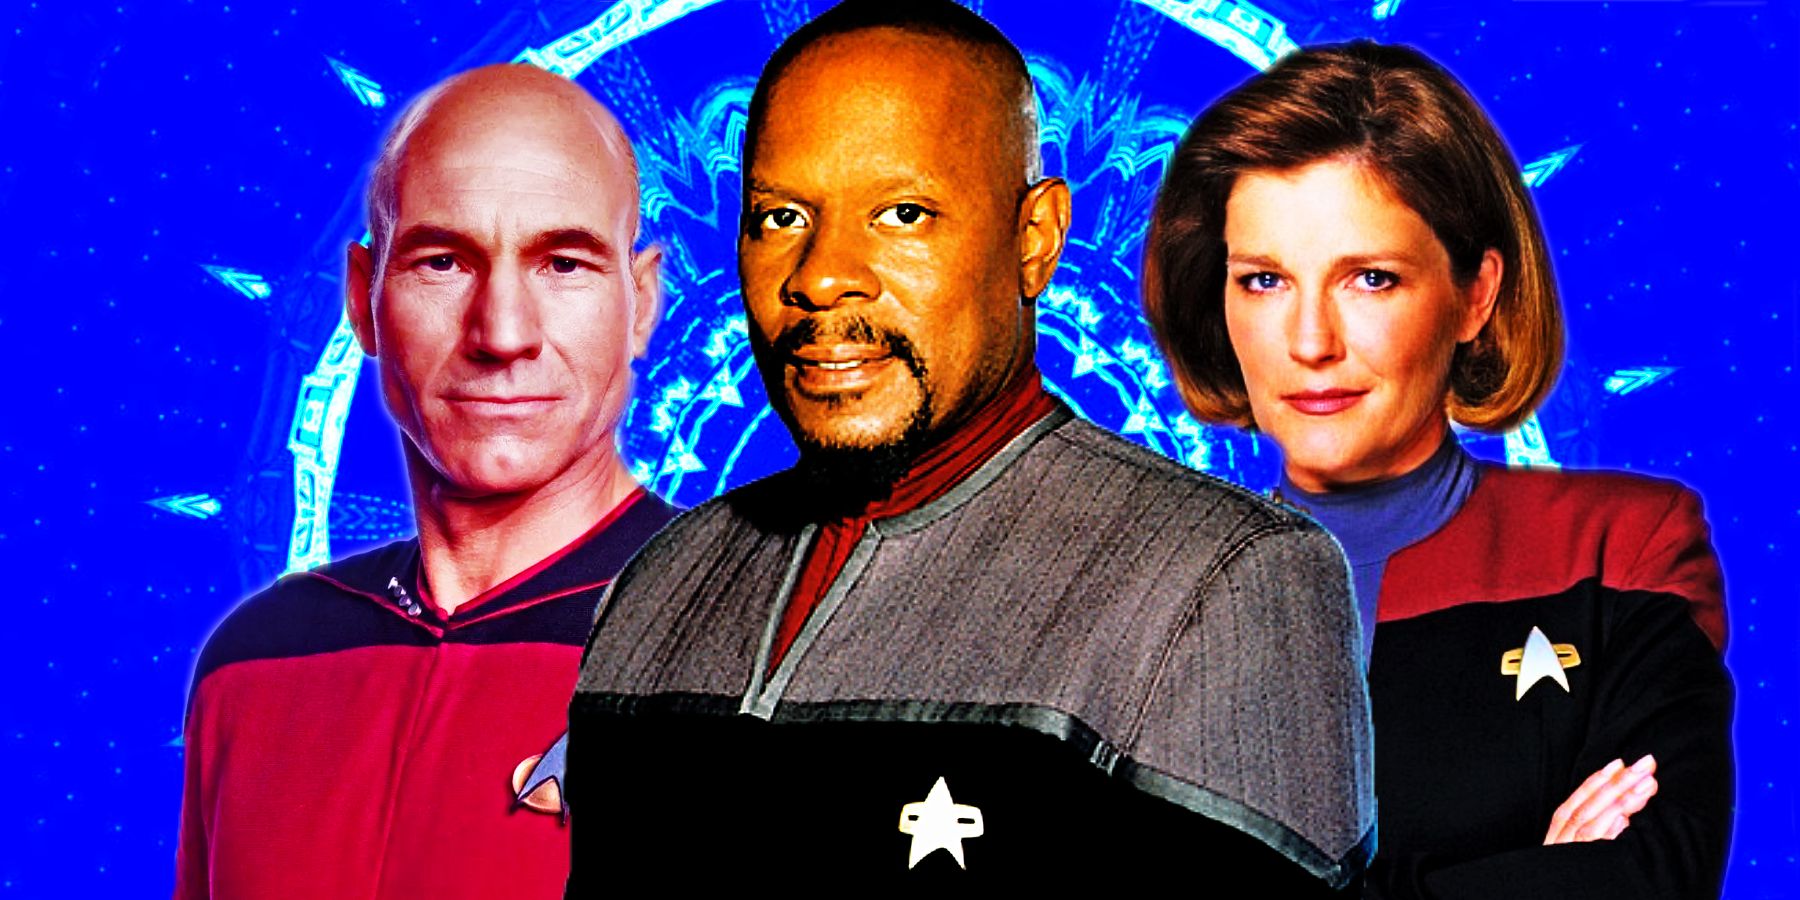 Patrick Stewart, Avery Brooks, and Kate Mulgrew as Picard, Sisko and Janeway from Star Trek